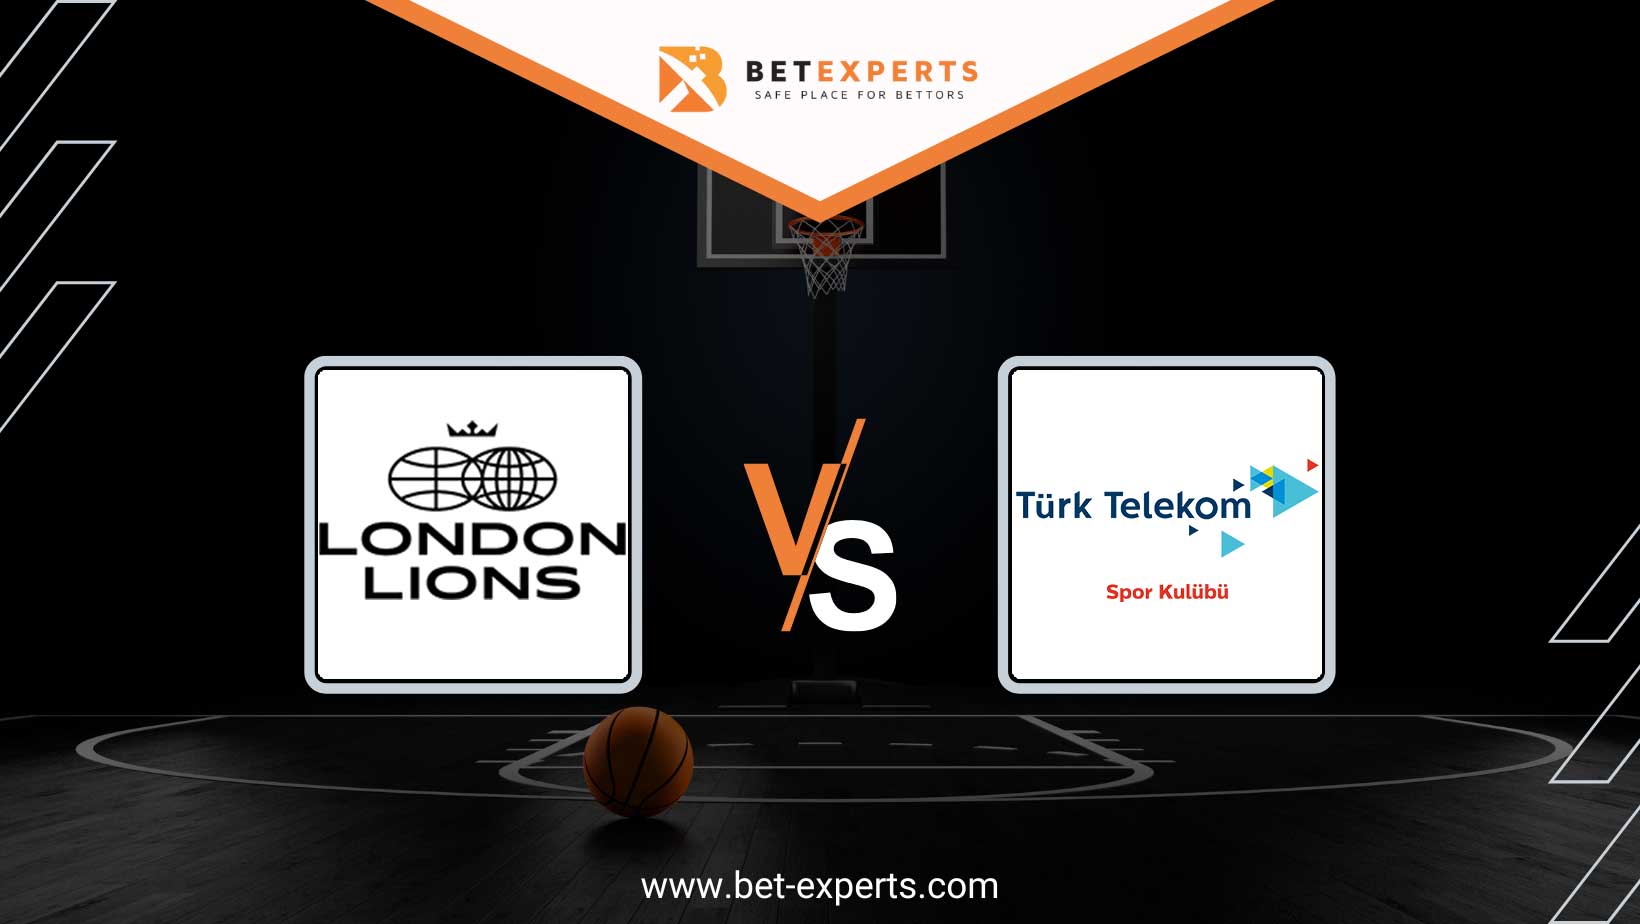 London Lions vs Turk Telekom Prediction